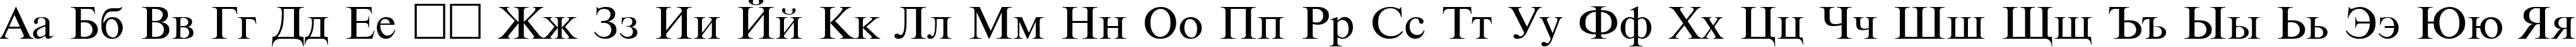 Пример написания русского алфавита шрифтом TimesET105n